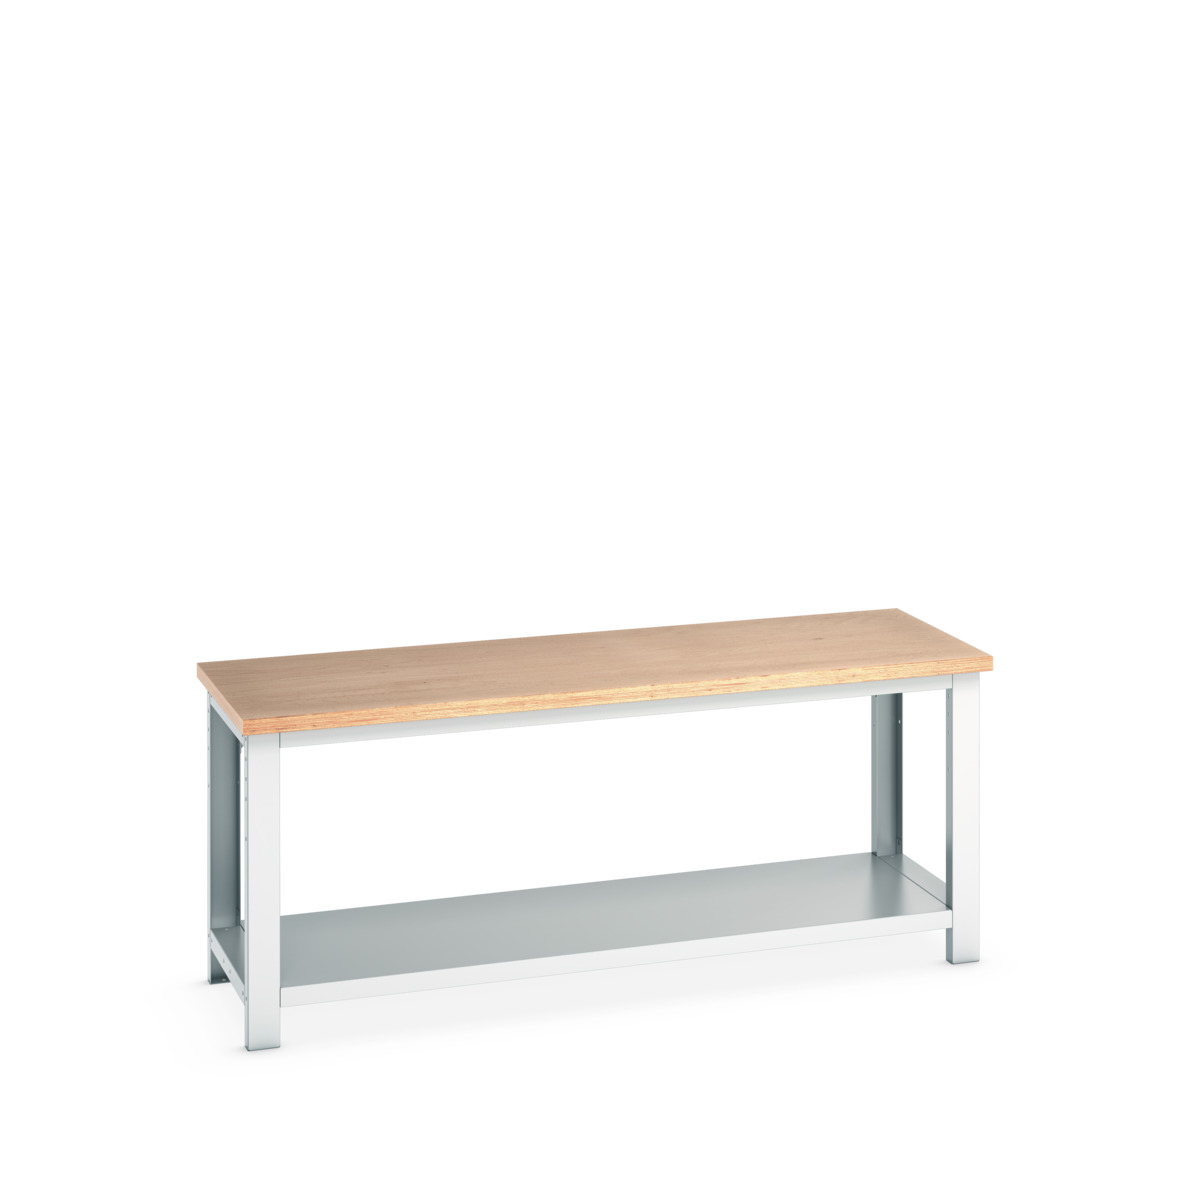 41003505. - cubio framework bench (mpx)